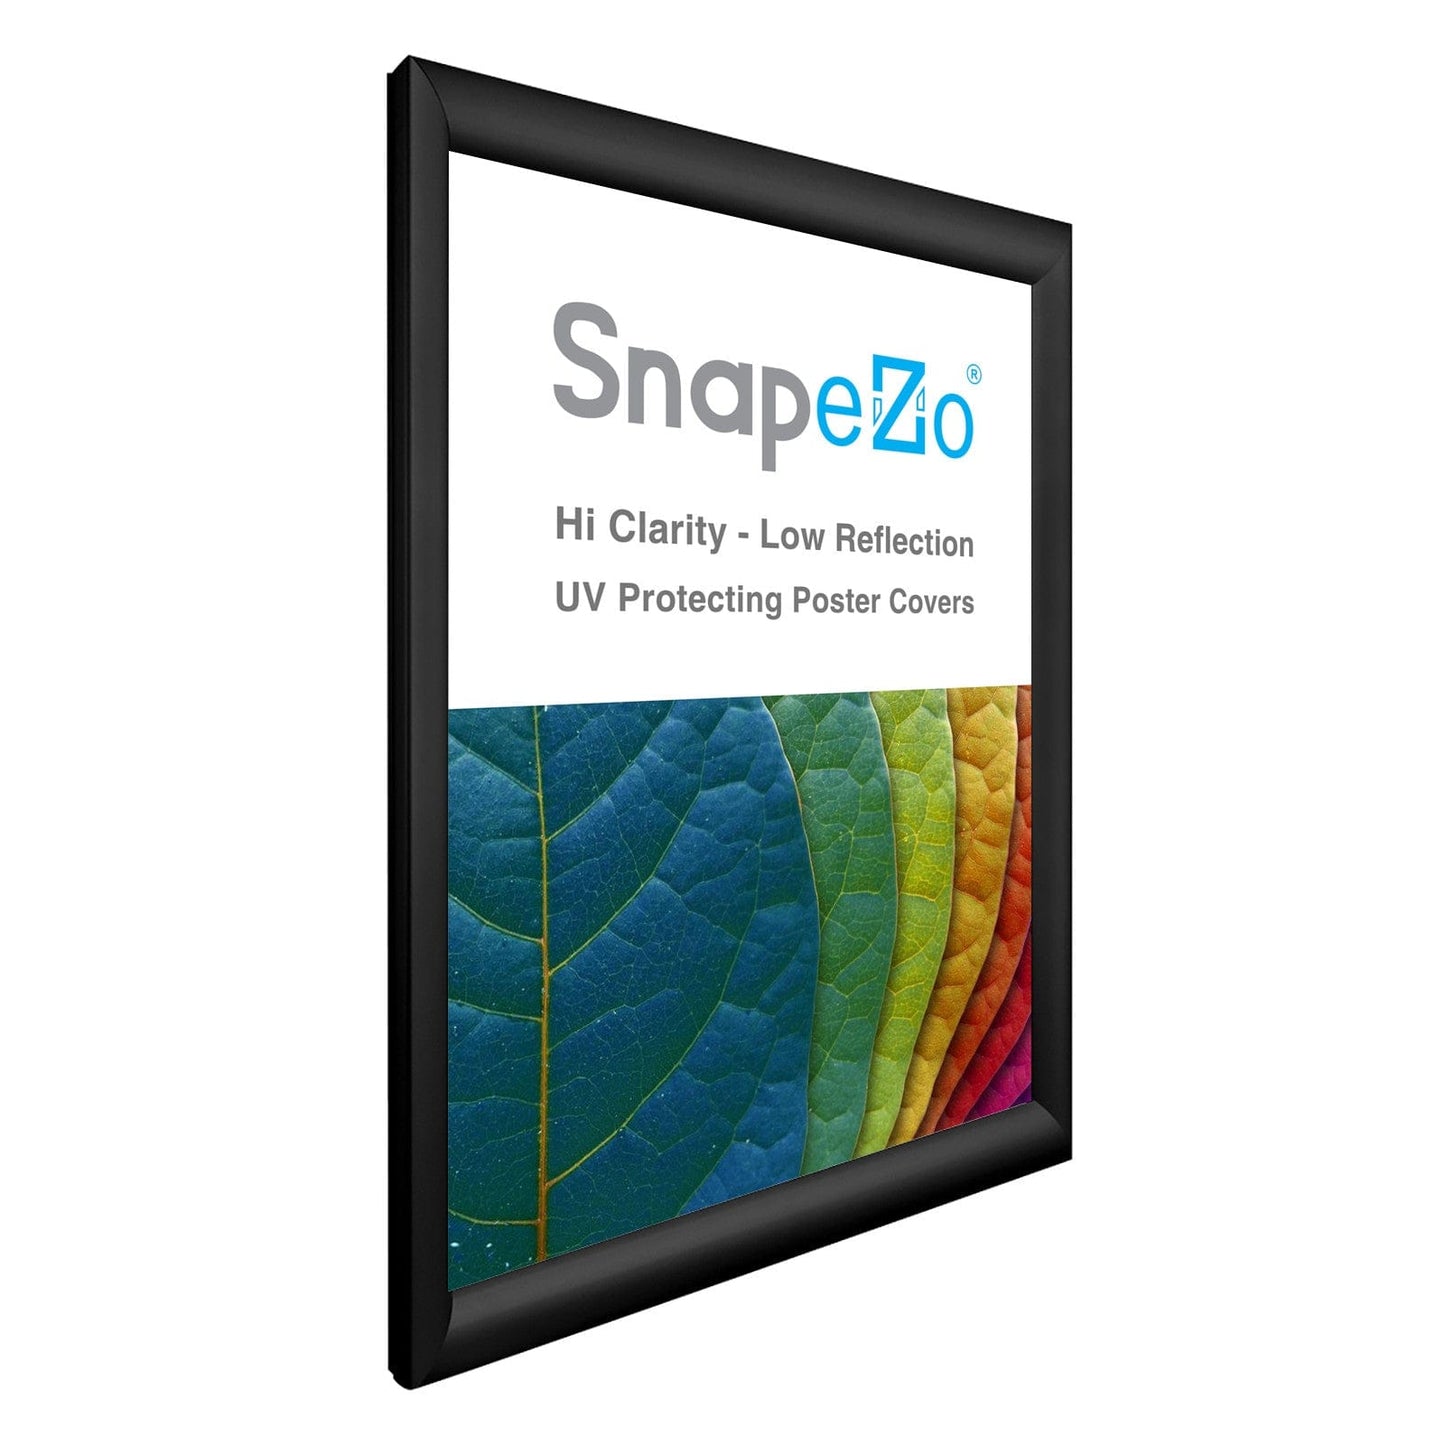 21x29 Black SnapeZo® Snap Frame - 1.2" Profile - Snap Frames Direct